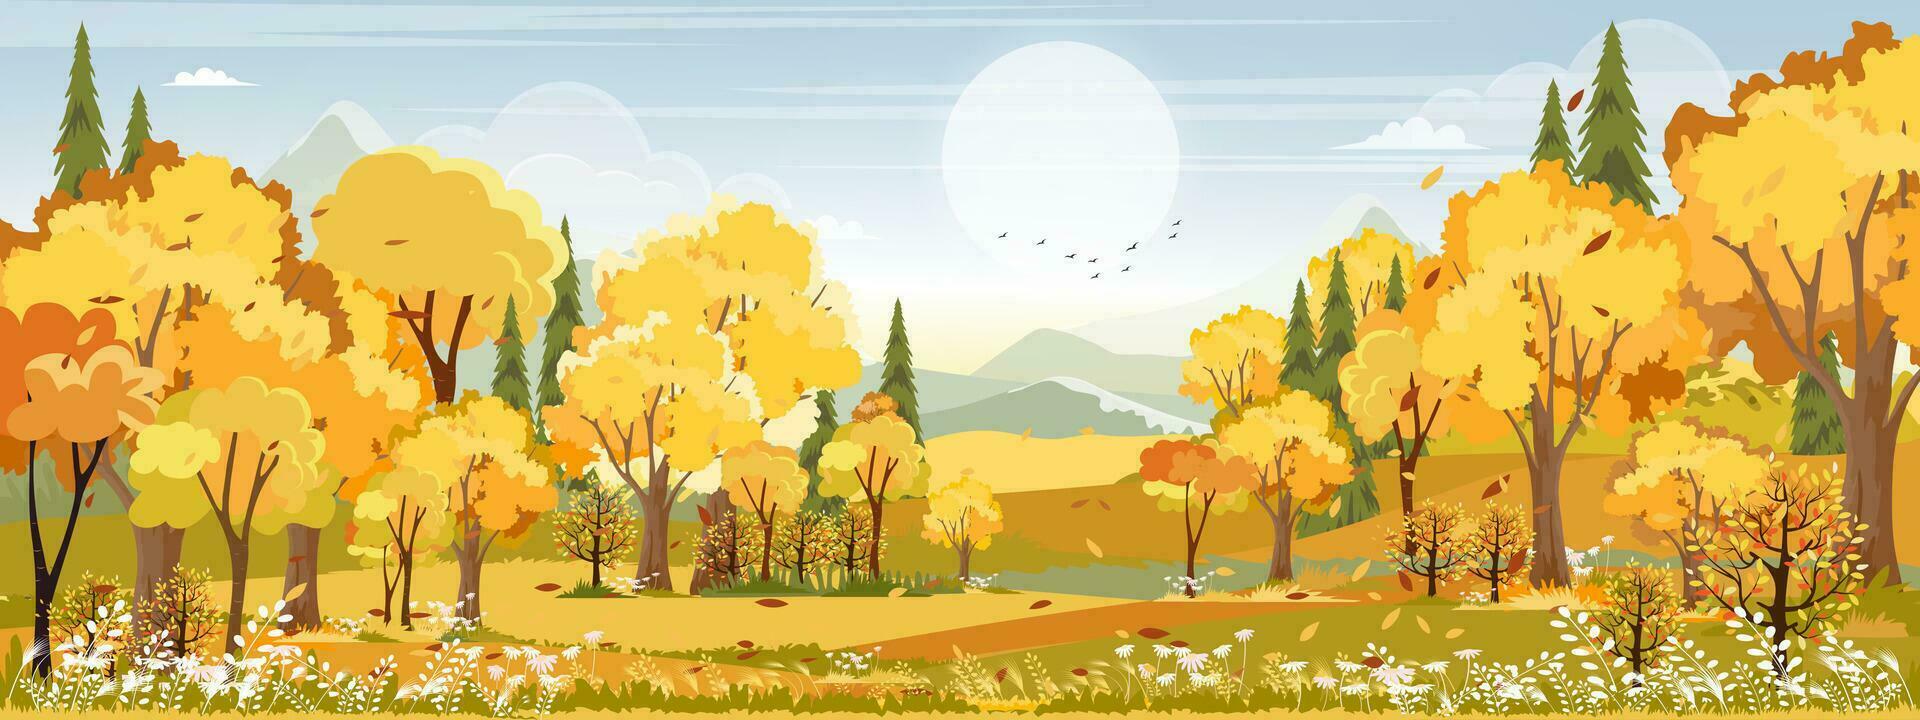 otoño paisaje paisaje con Mañana cielo y nube terminado bosque arboles con otoño hojas,vector bandera maravilloso pintoresco antecedentes con amarillo follaje, dibujos animados color naturaleza otoño temporada antecedentes vector